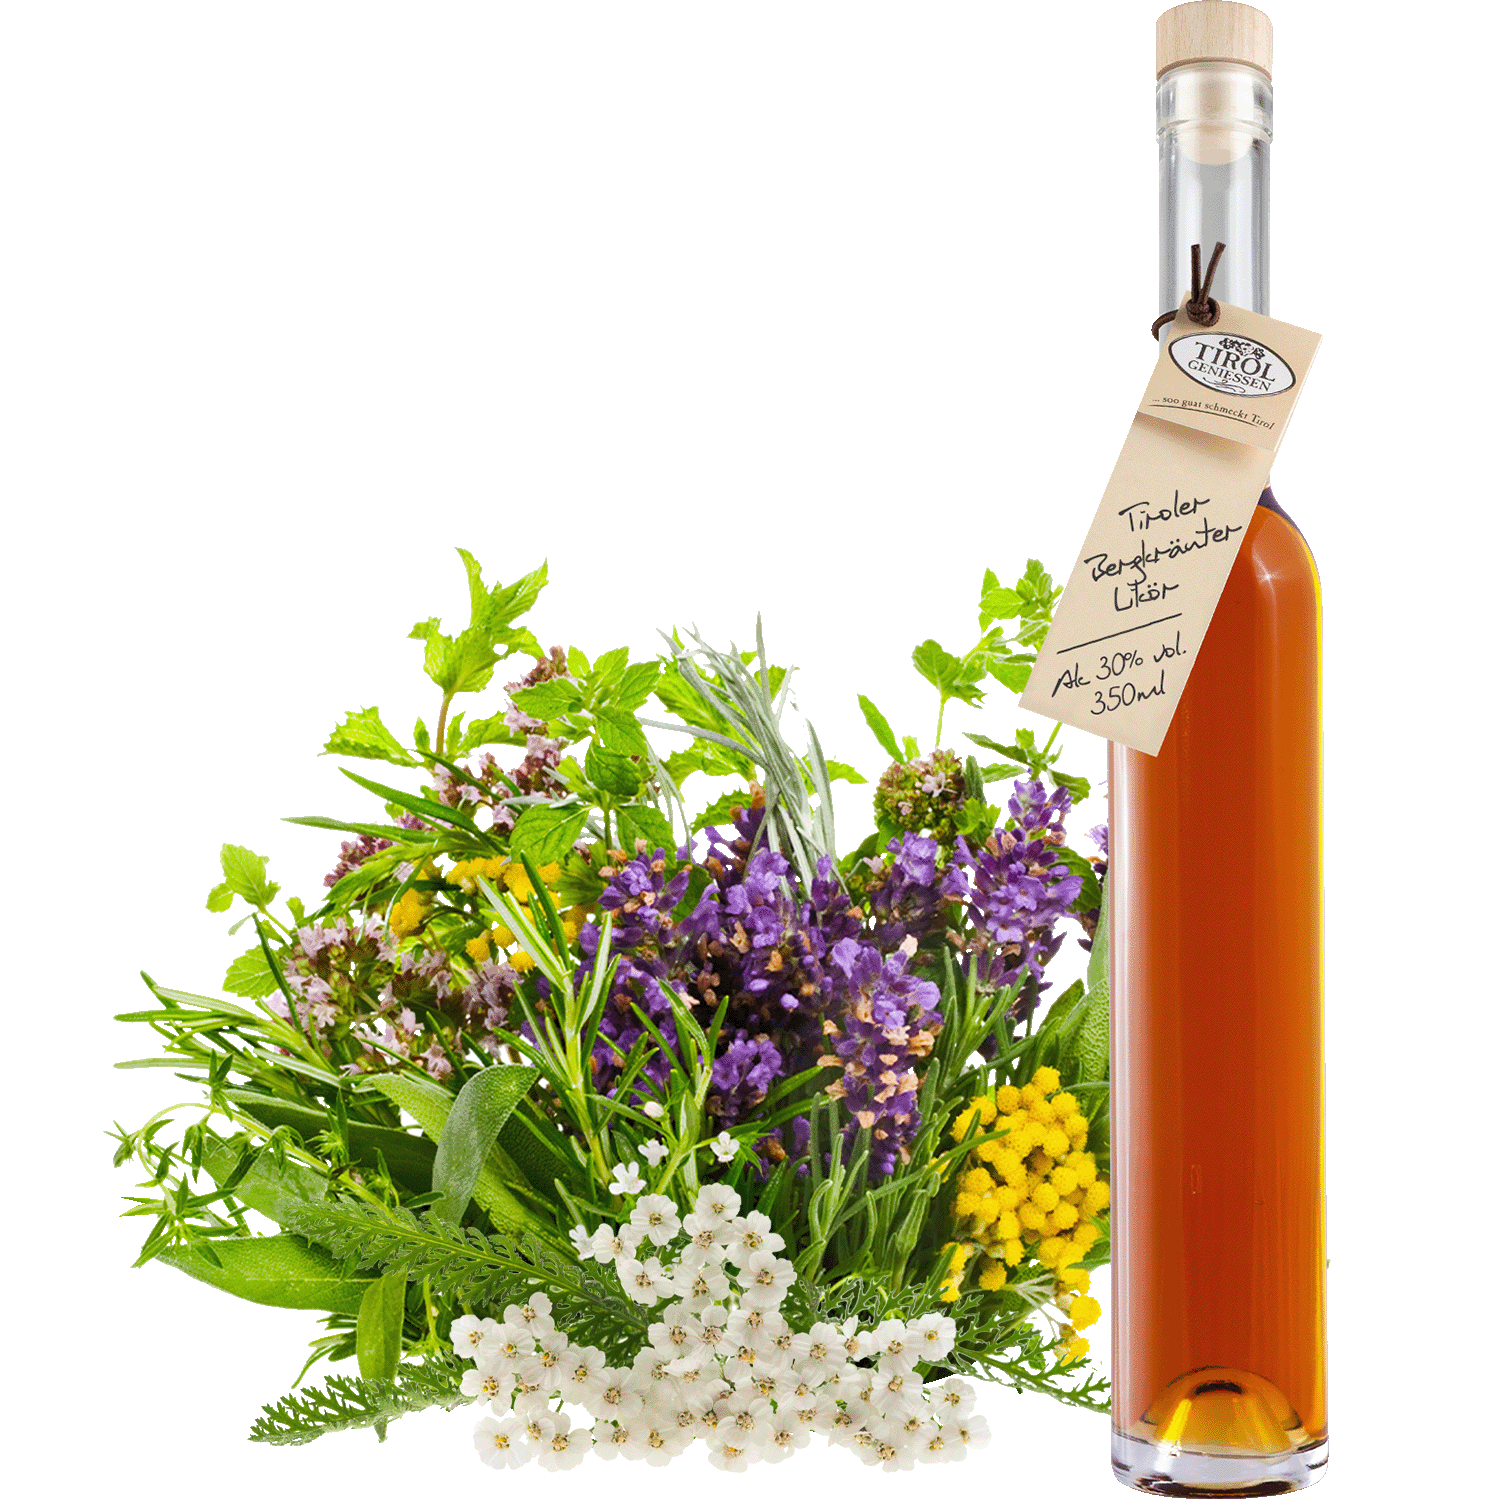 Mountain Herbal Liqueur in gift bottle from Austria from Tirol Geniessen